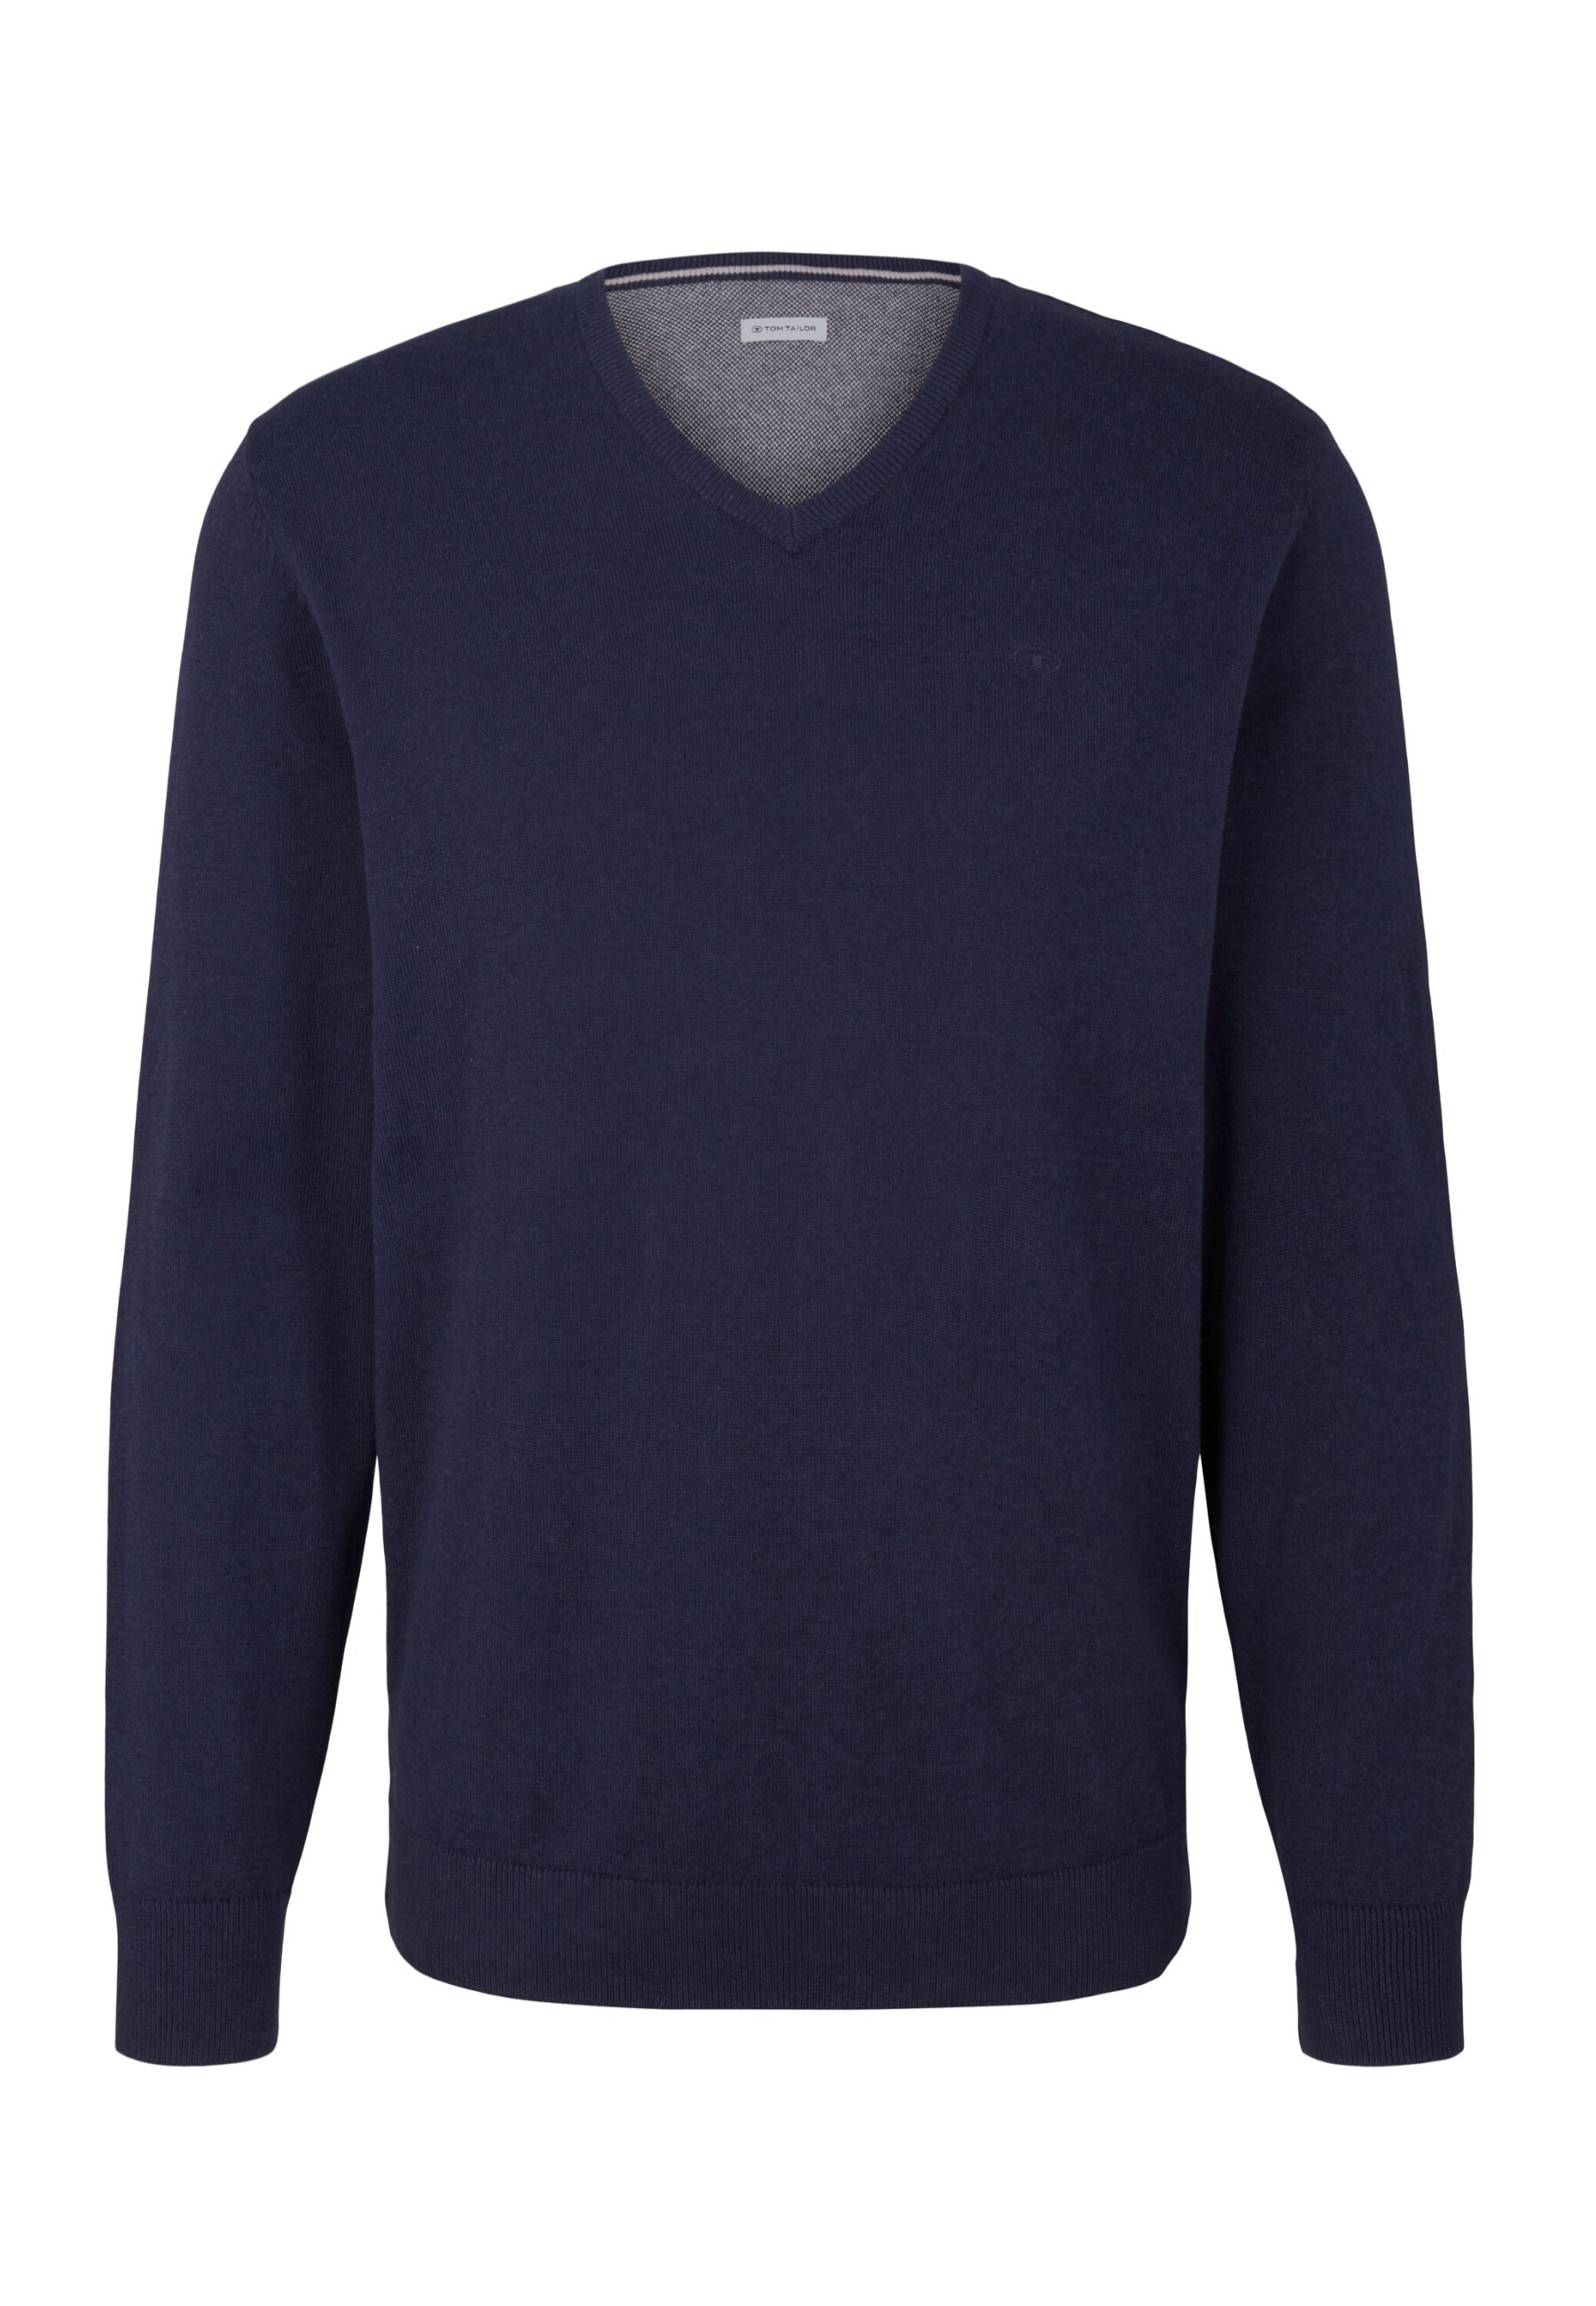 Пуловер Tom Tailor, синий пуловер tom tailor размер l синий